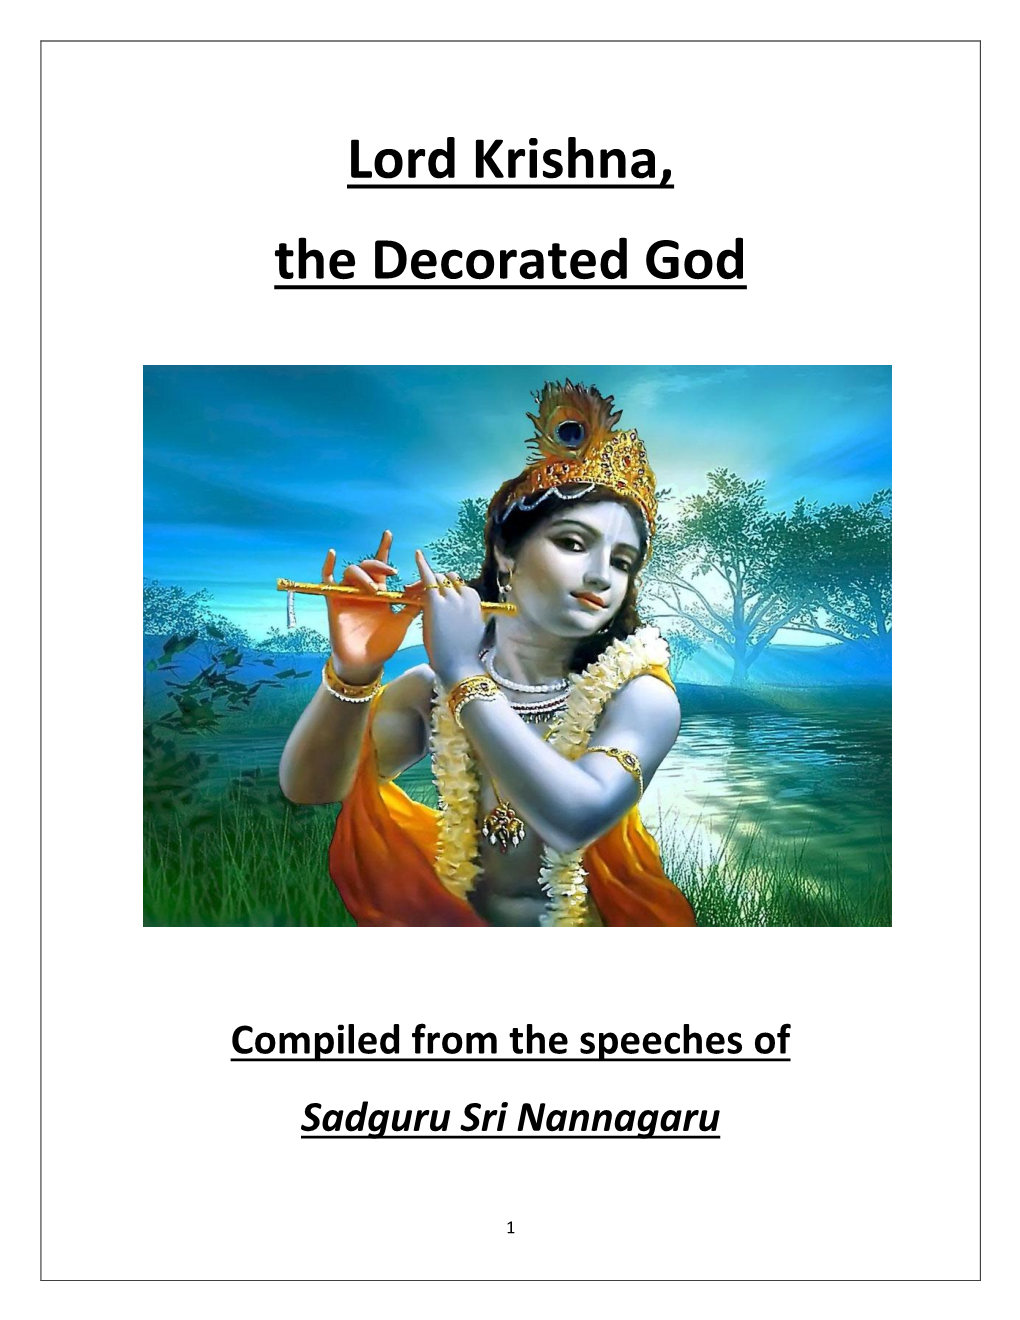 Lord Krishna, the Decorated God